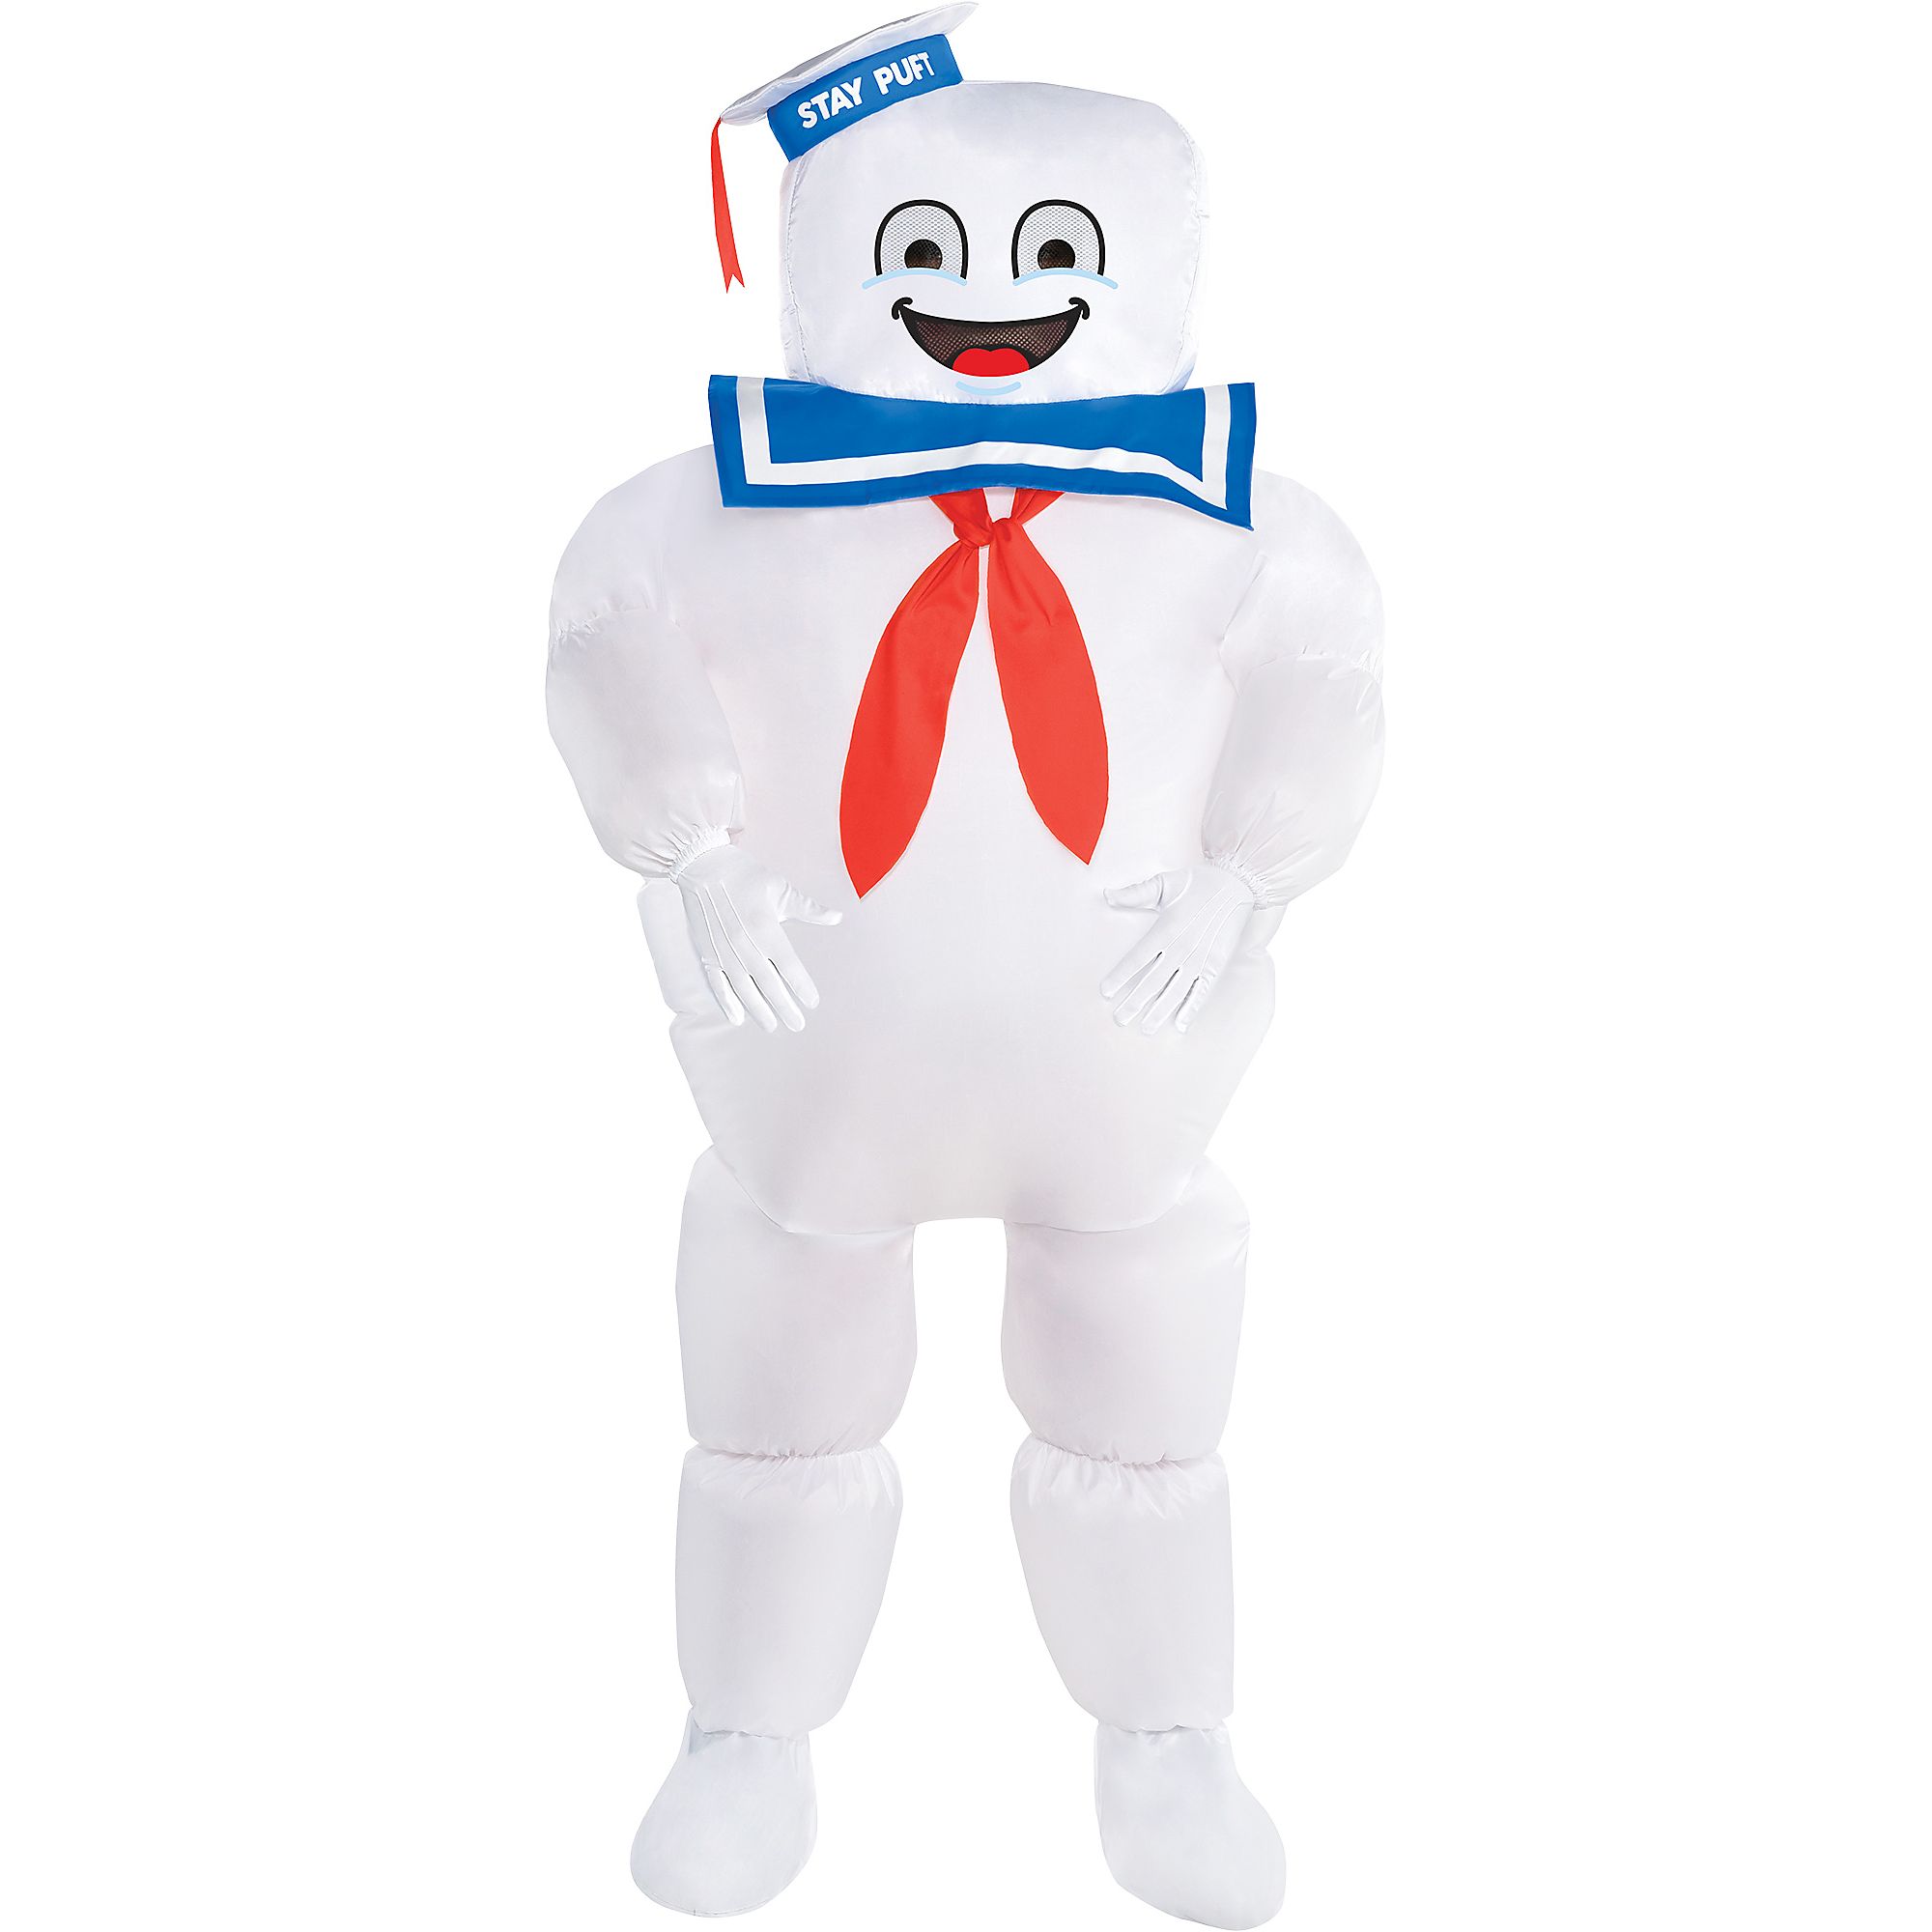 Stay Puft Marshmallow Man Halloween Costume - Classic Inflatable Stay Puft Marshmallow Man Halloween Costume